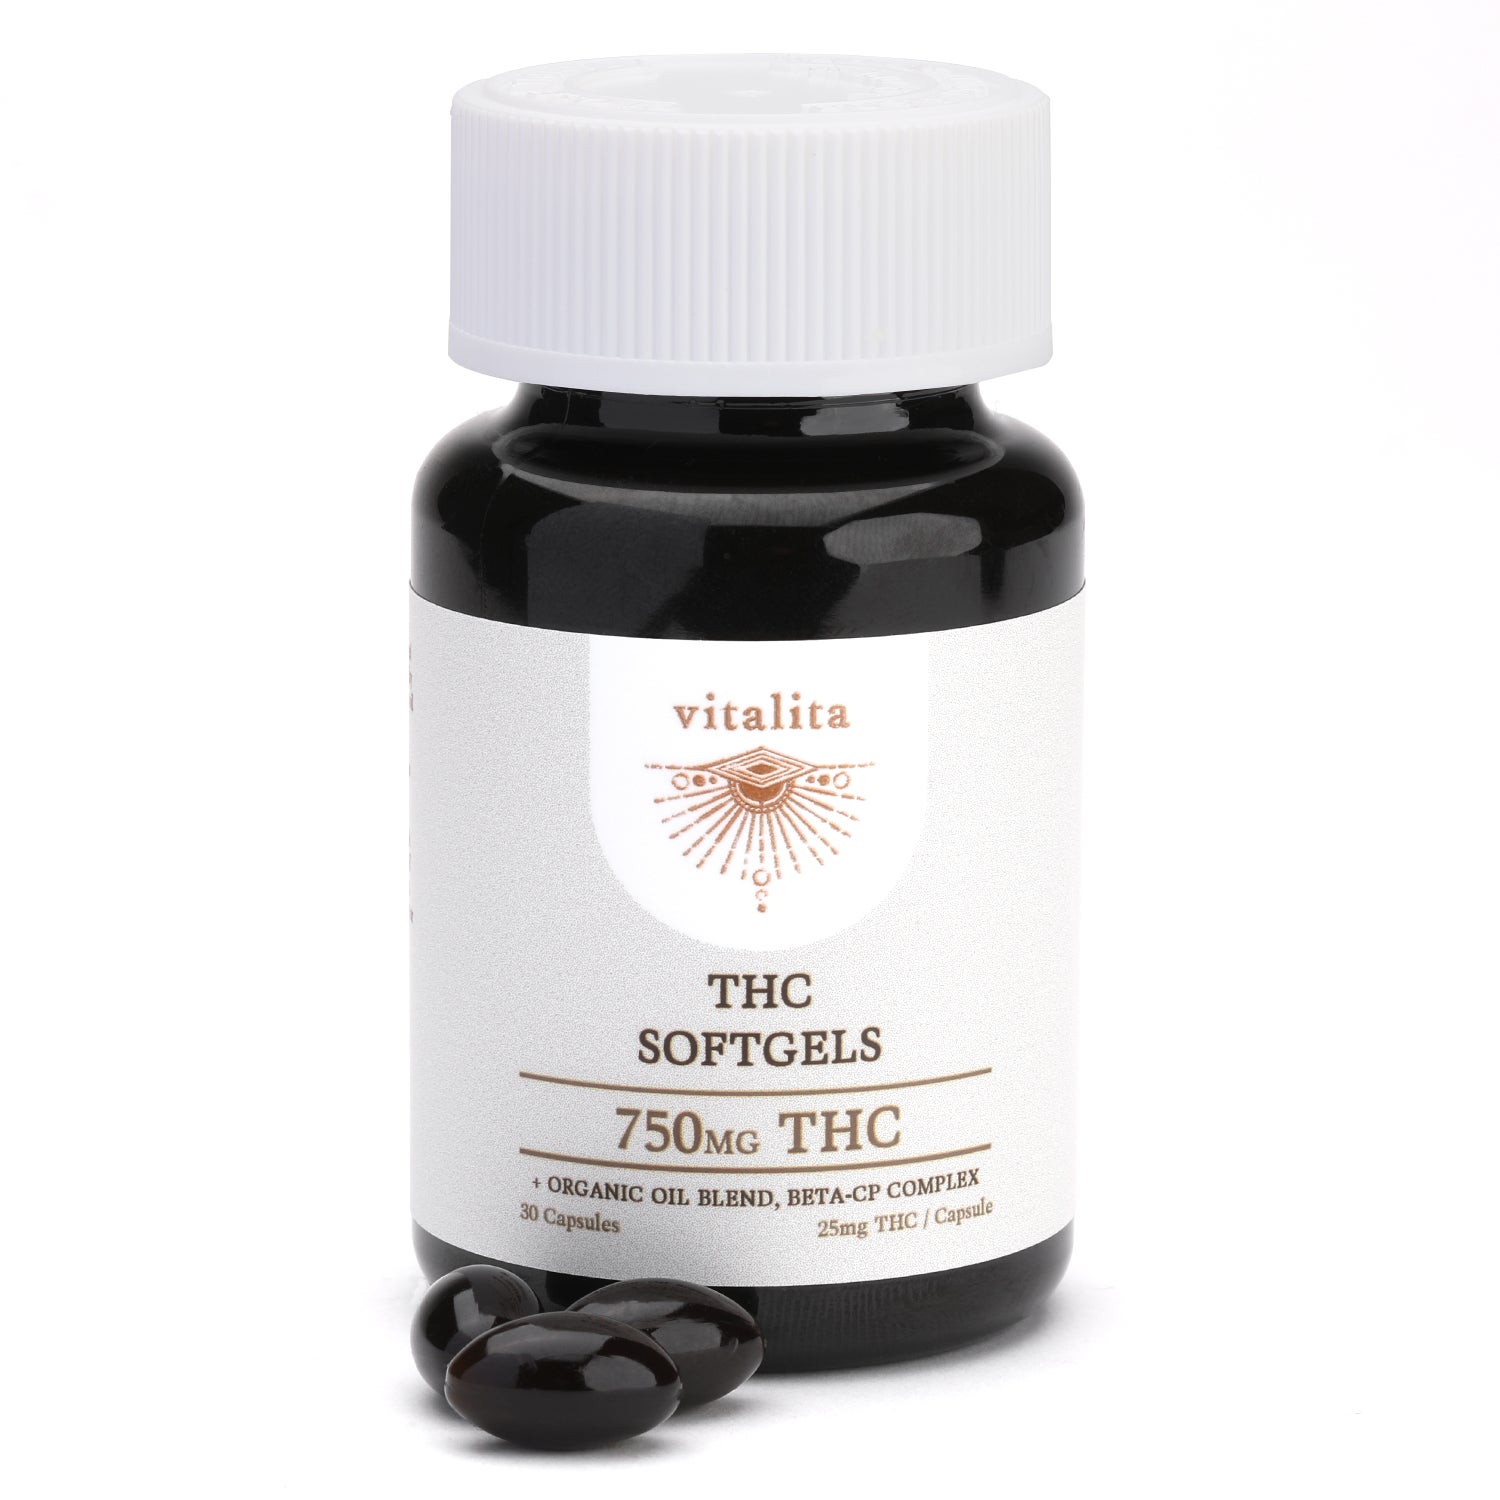 Vitalita-THC Softgel- 750mg(25mg)